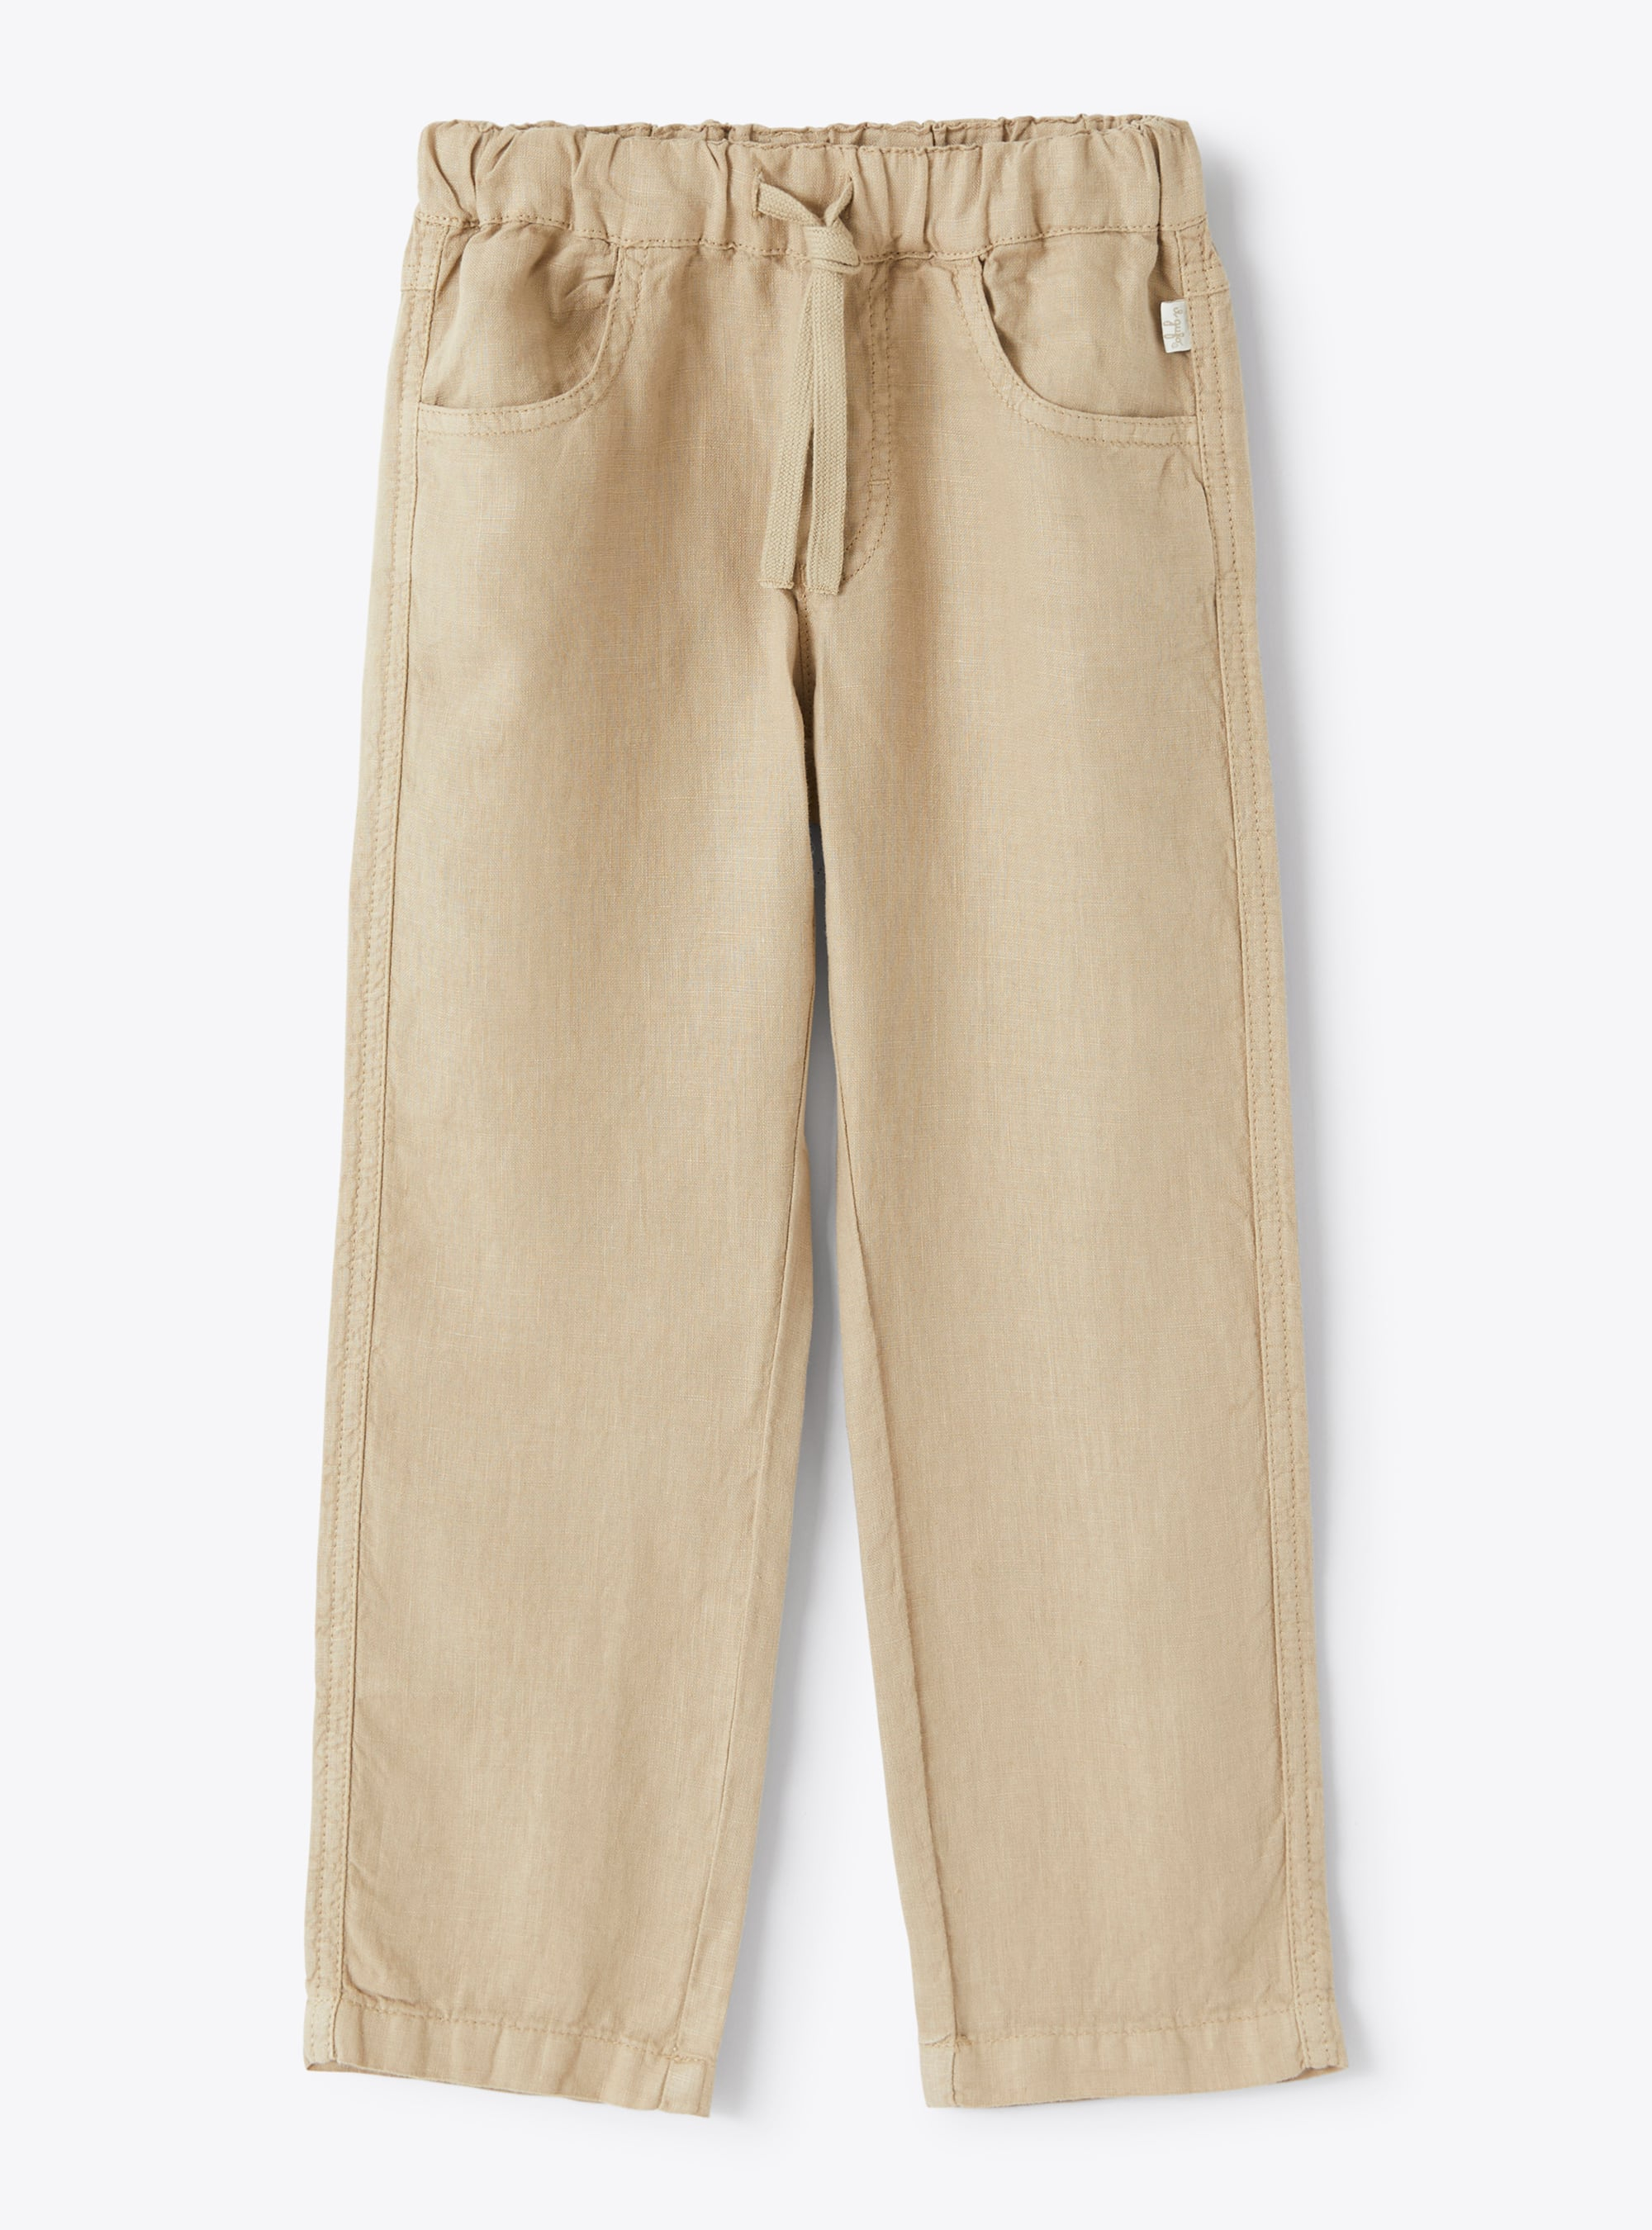 Drawstring trousers in beige linen - Trousers - Il Gufo